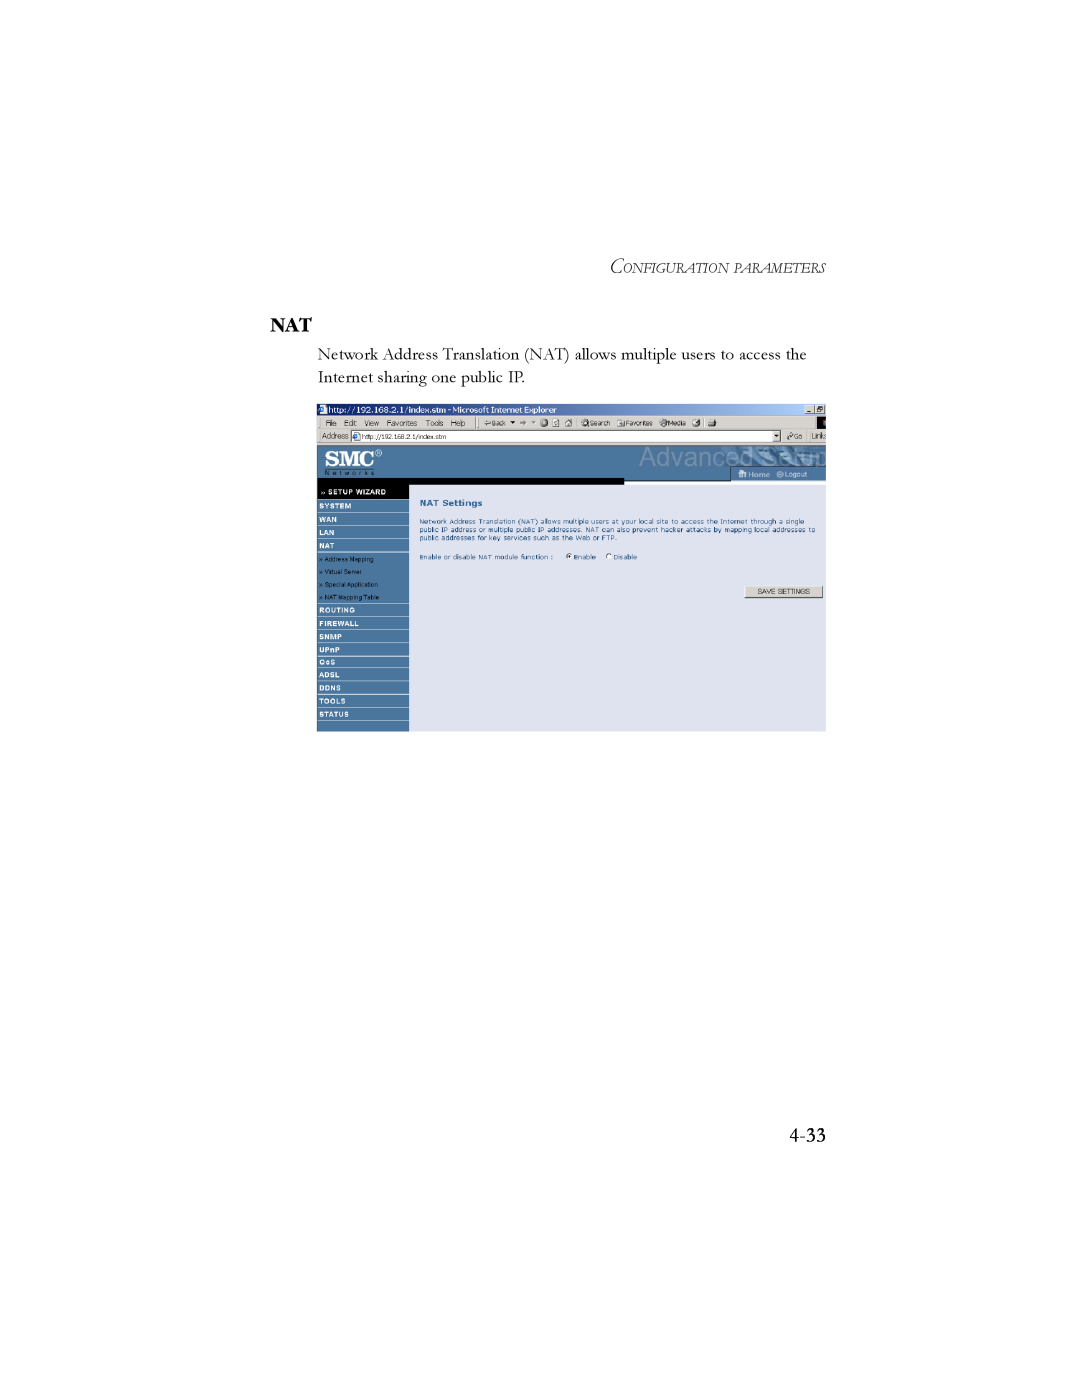 SMC Networks SMC7904BRB2 manual 4-33, Configuration Parameters 